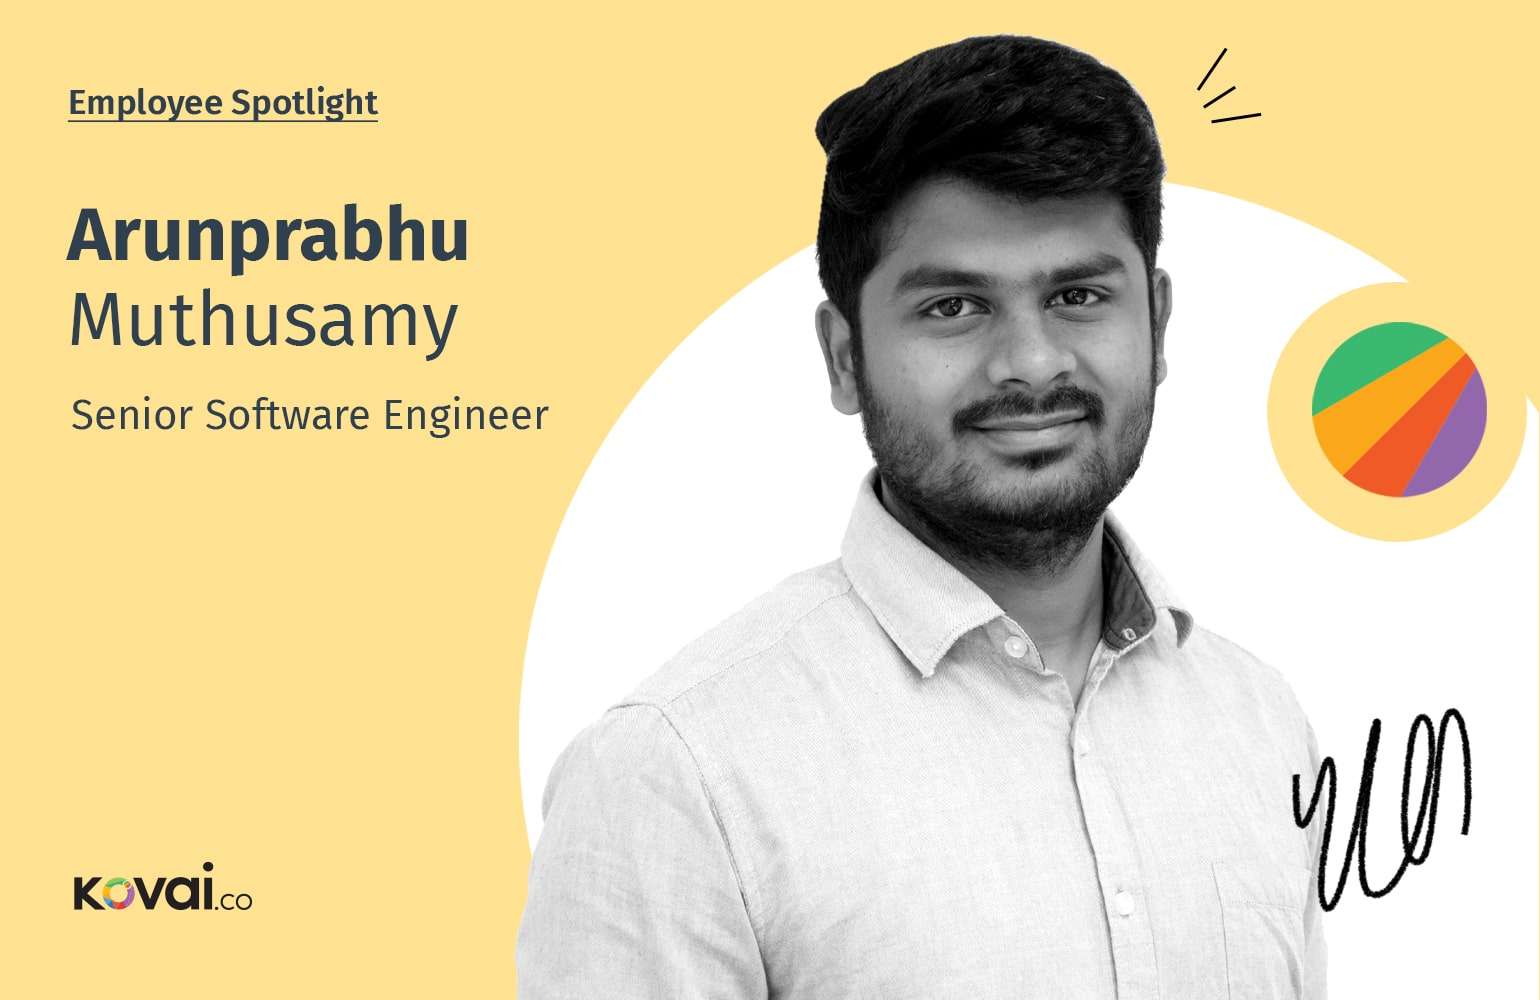 Arunprabhu Muthusamy: Employee Spotlight